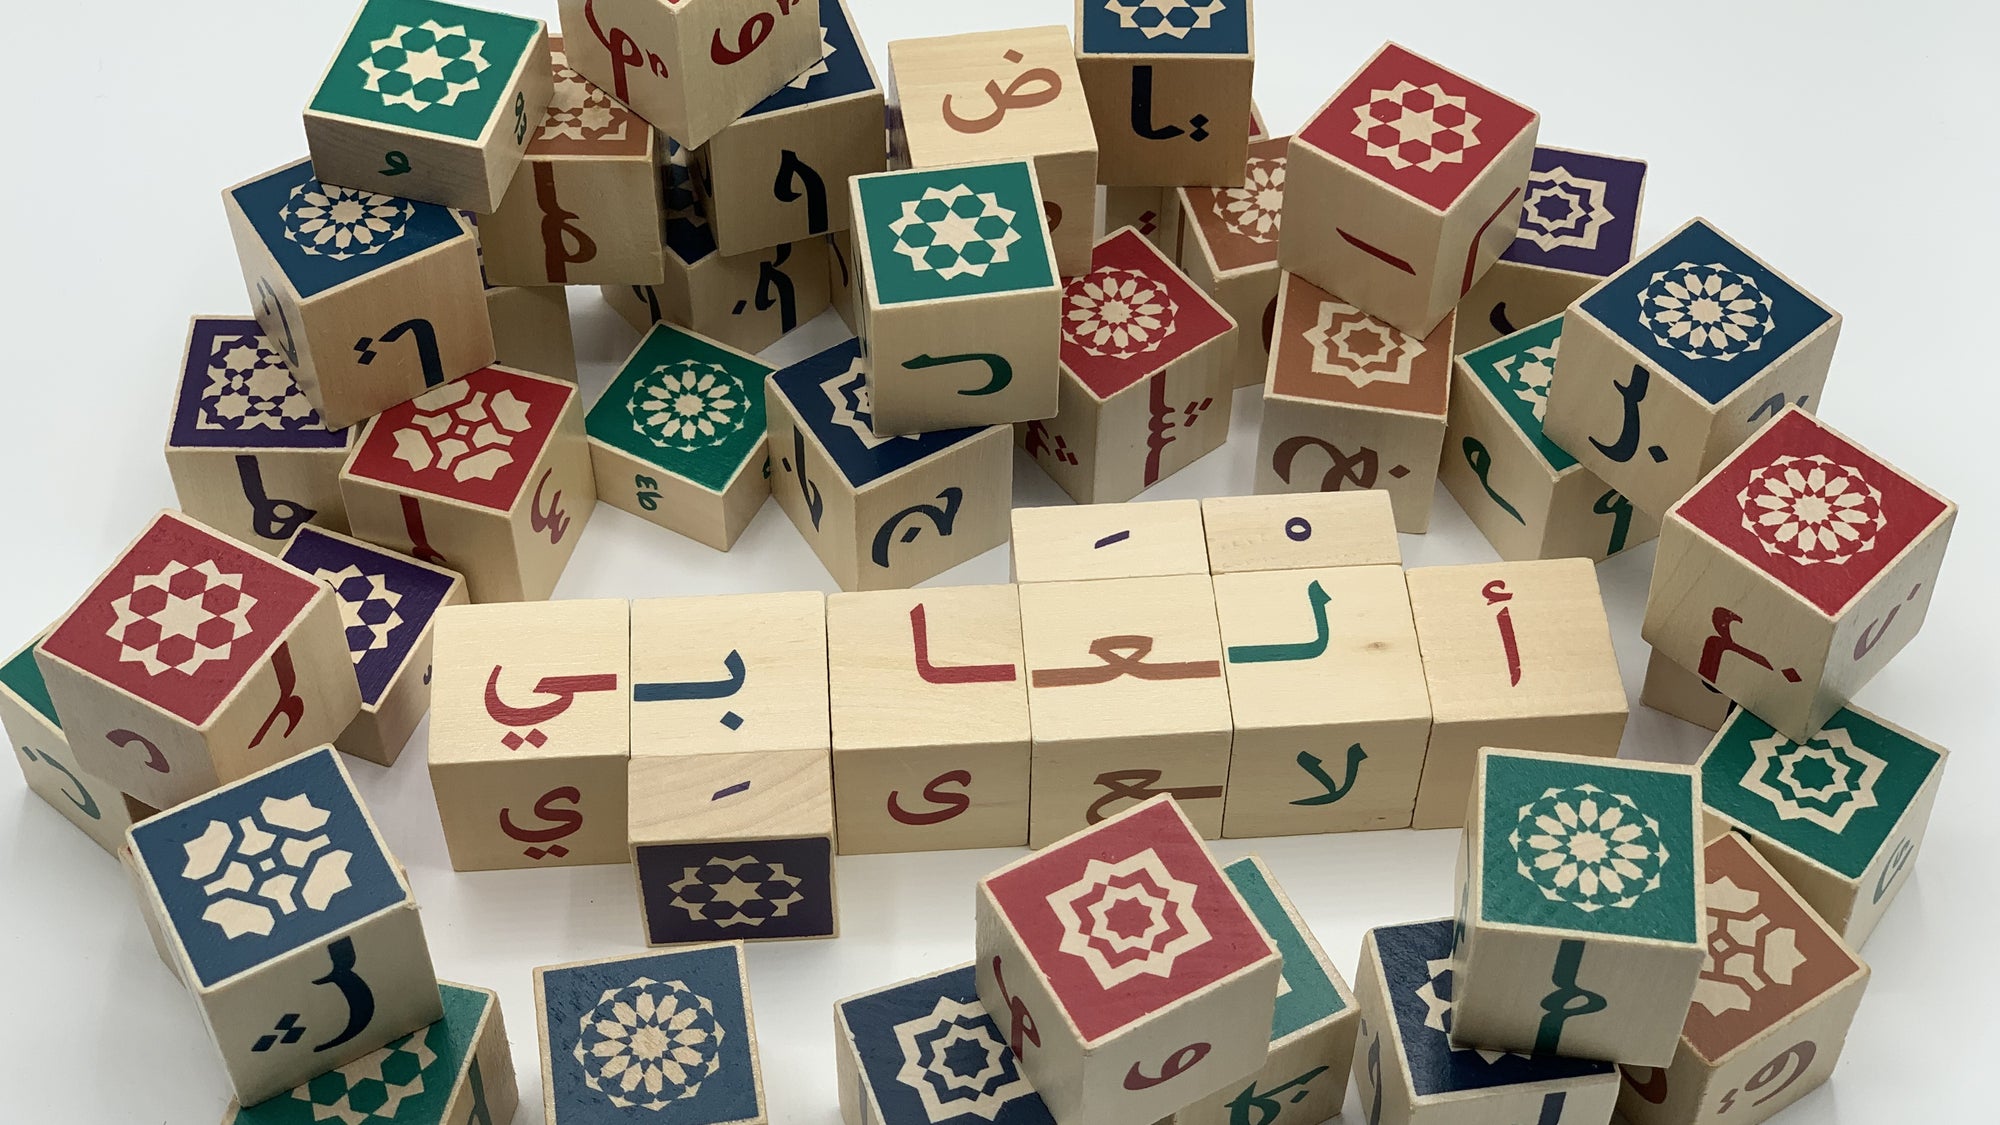 Hala alaabi toys arabic fun learning language arabicubes العابي